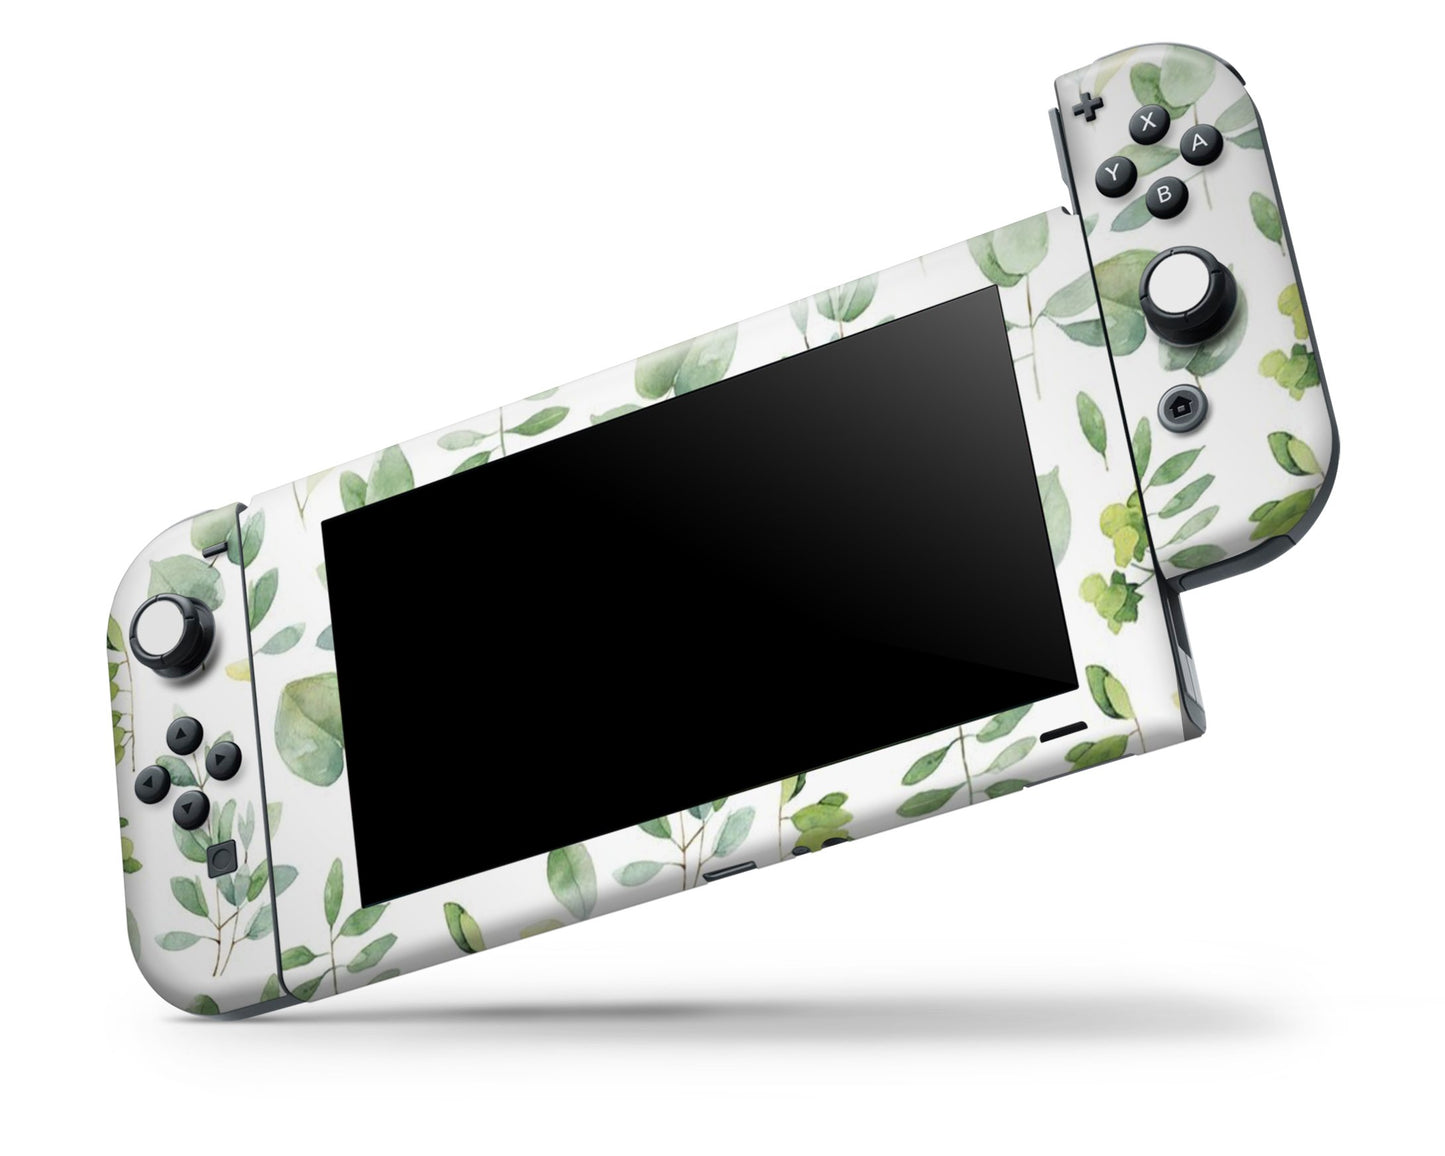 Lux Skins Nintendo Switch Watercolor Green Leaf Pattern Full Set Skins - Art Artwork Skin